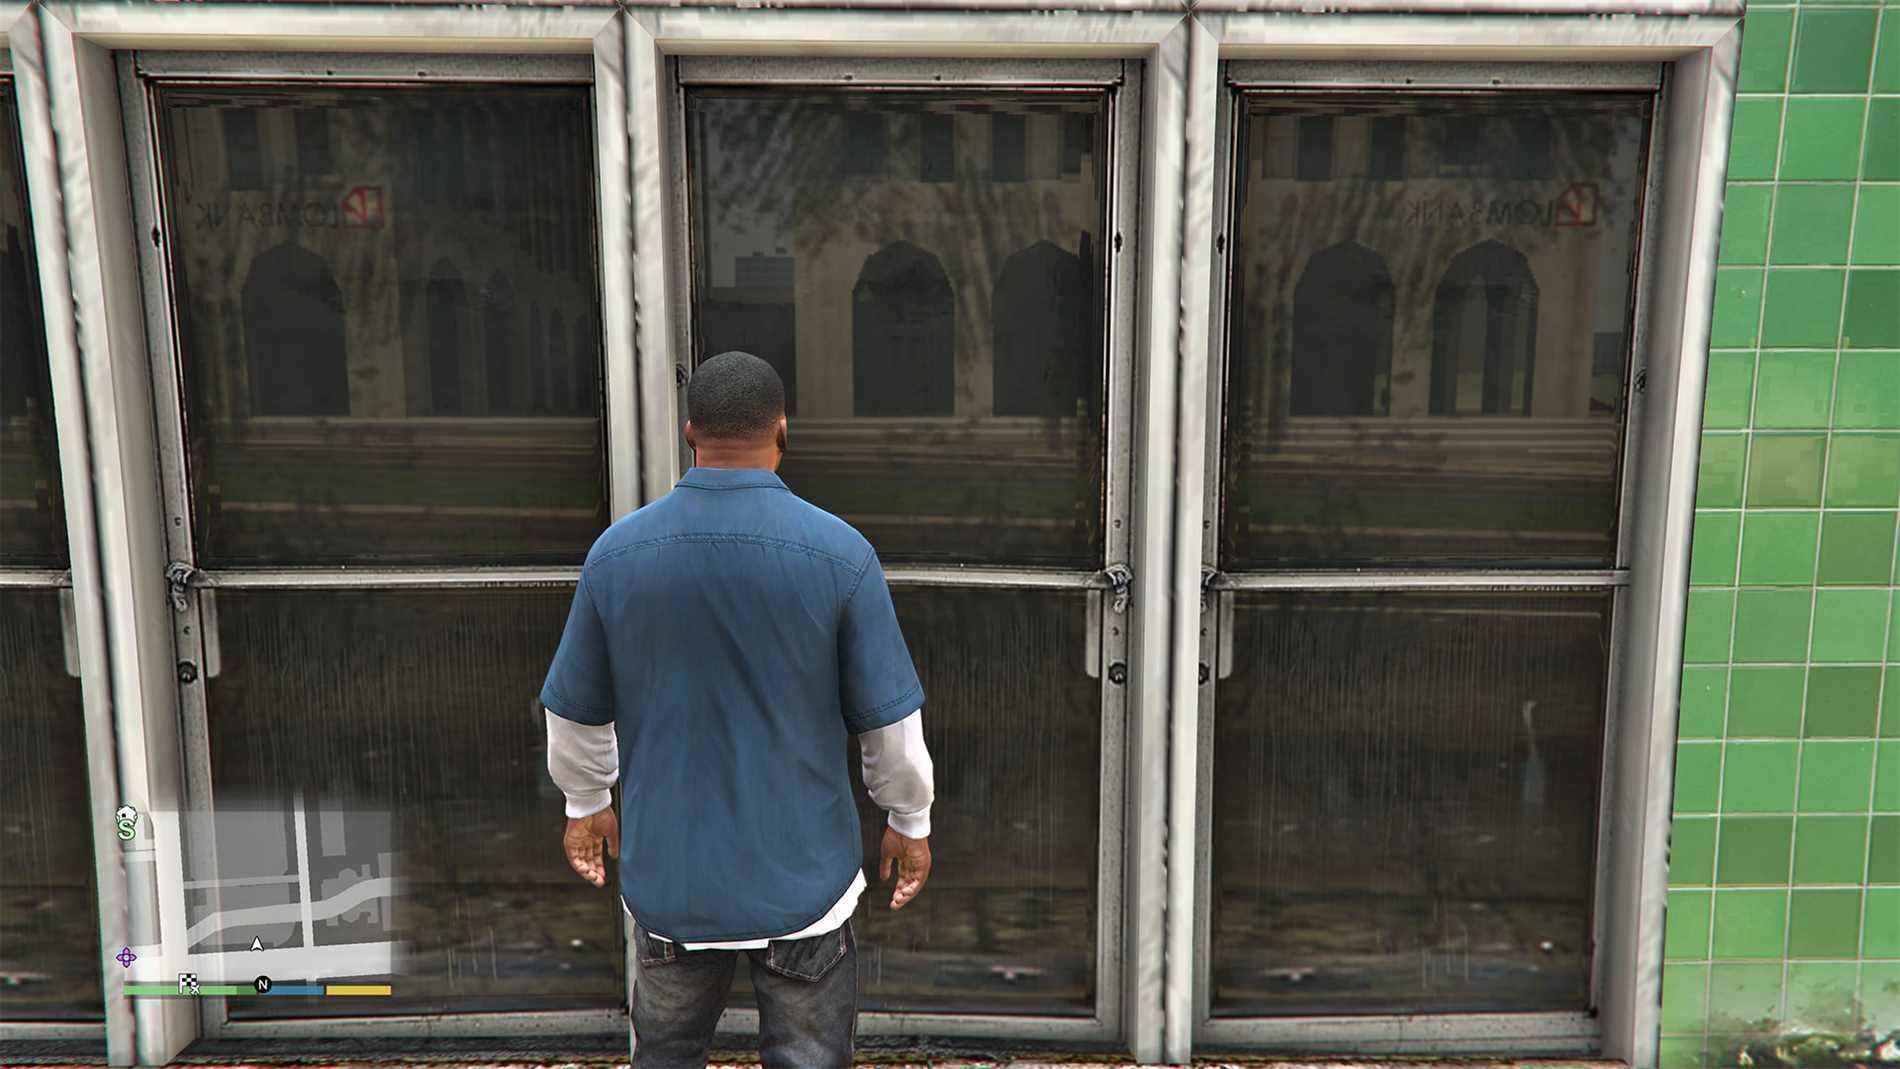 Grand Theft Auto V GTA5 miroirs miroir réflexion gameplay technique défi de conception de jeu ray tracing